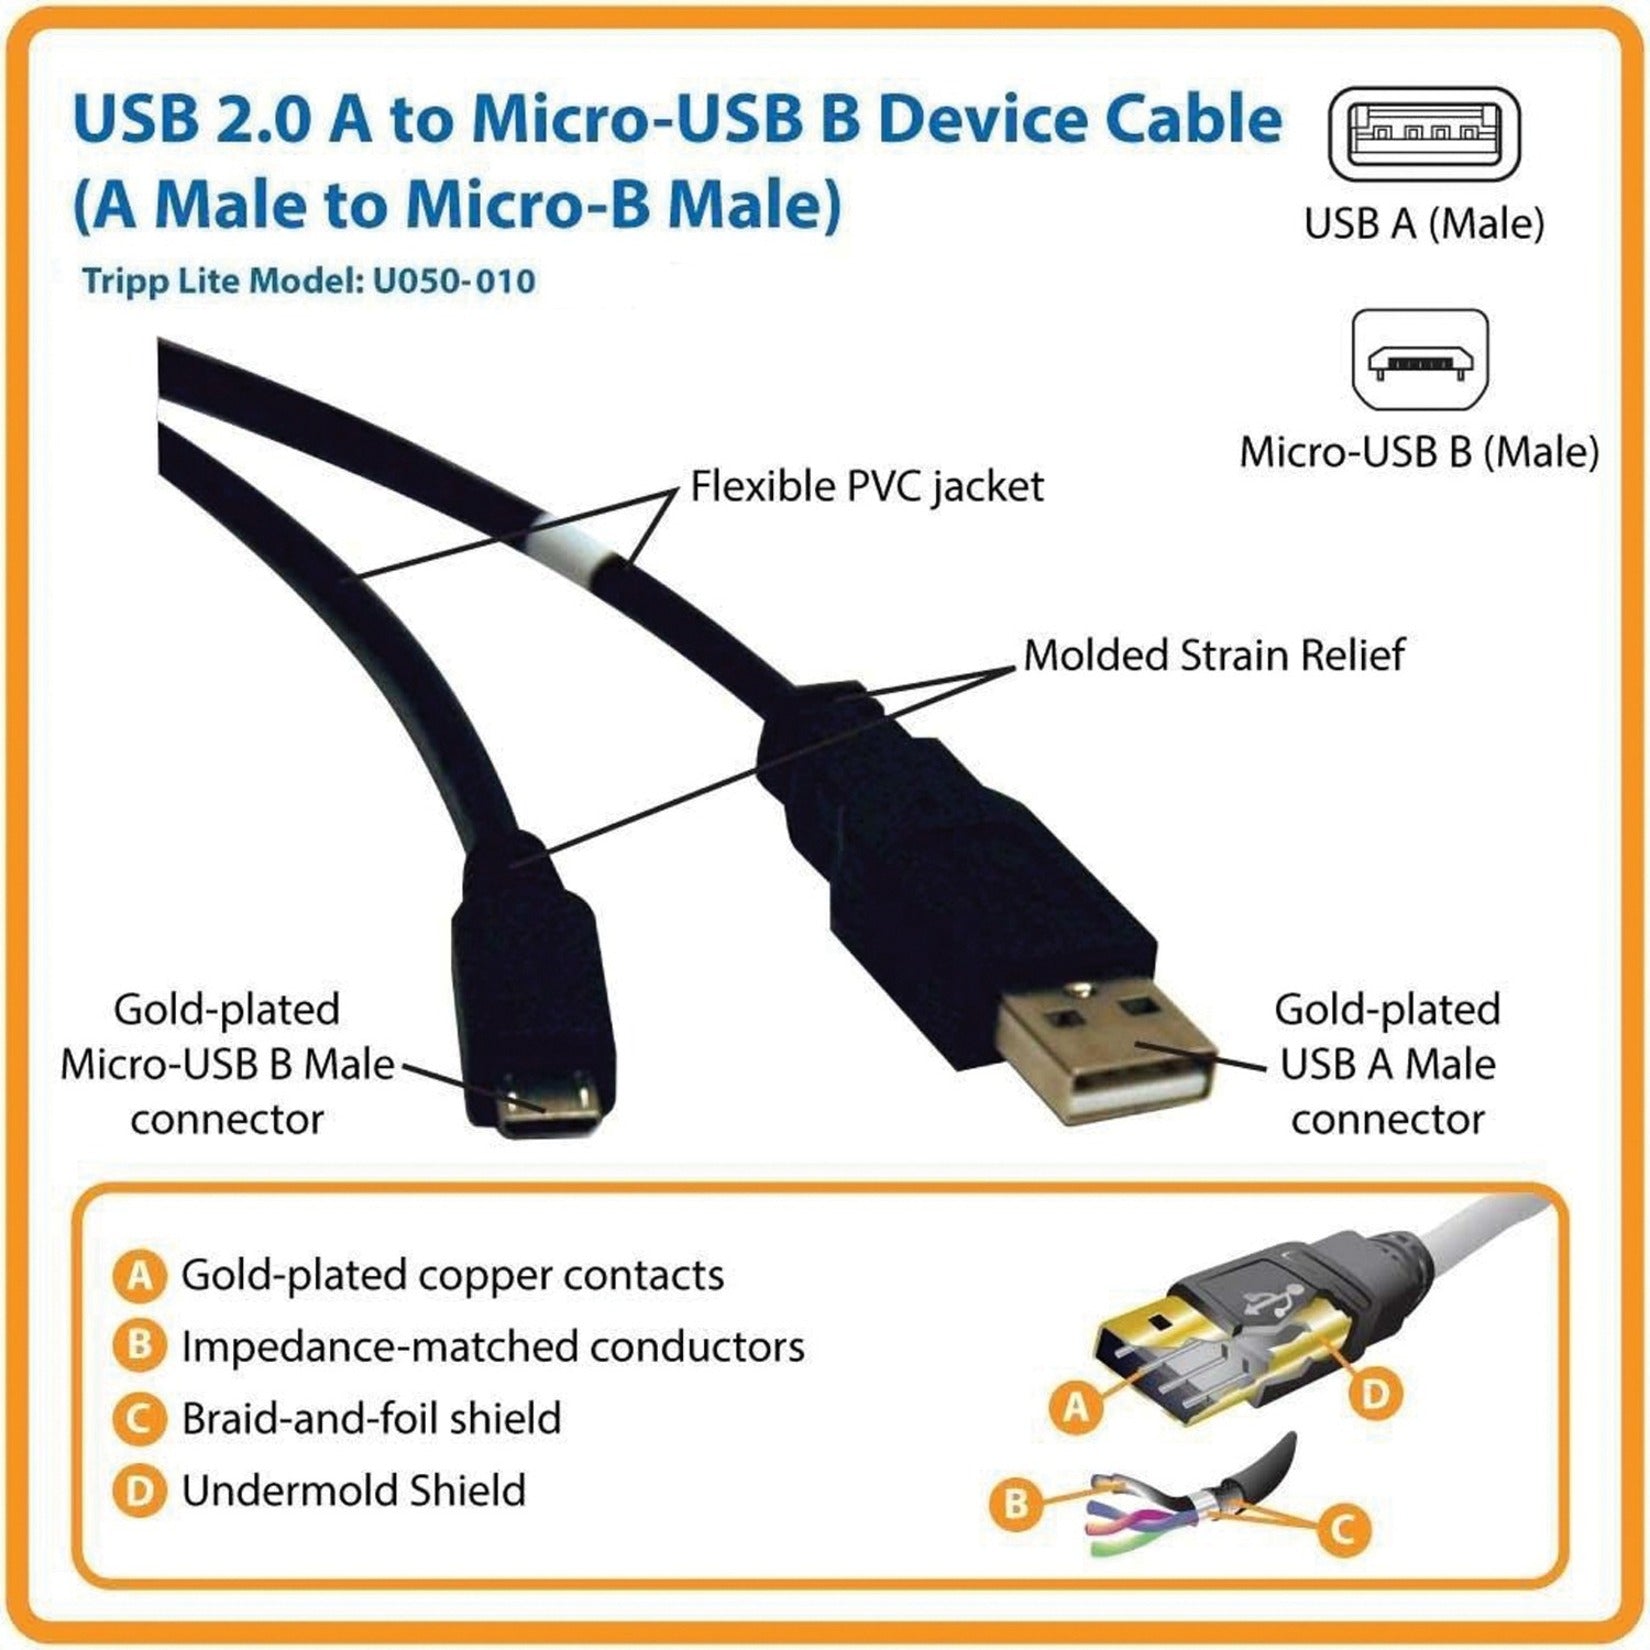 Tripp Lite U050-010 USB Cable Adapter, 10 ft, Copper Conductor, Black